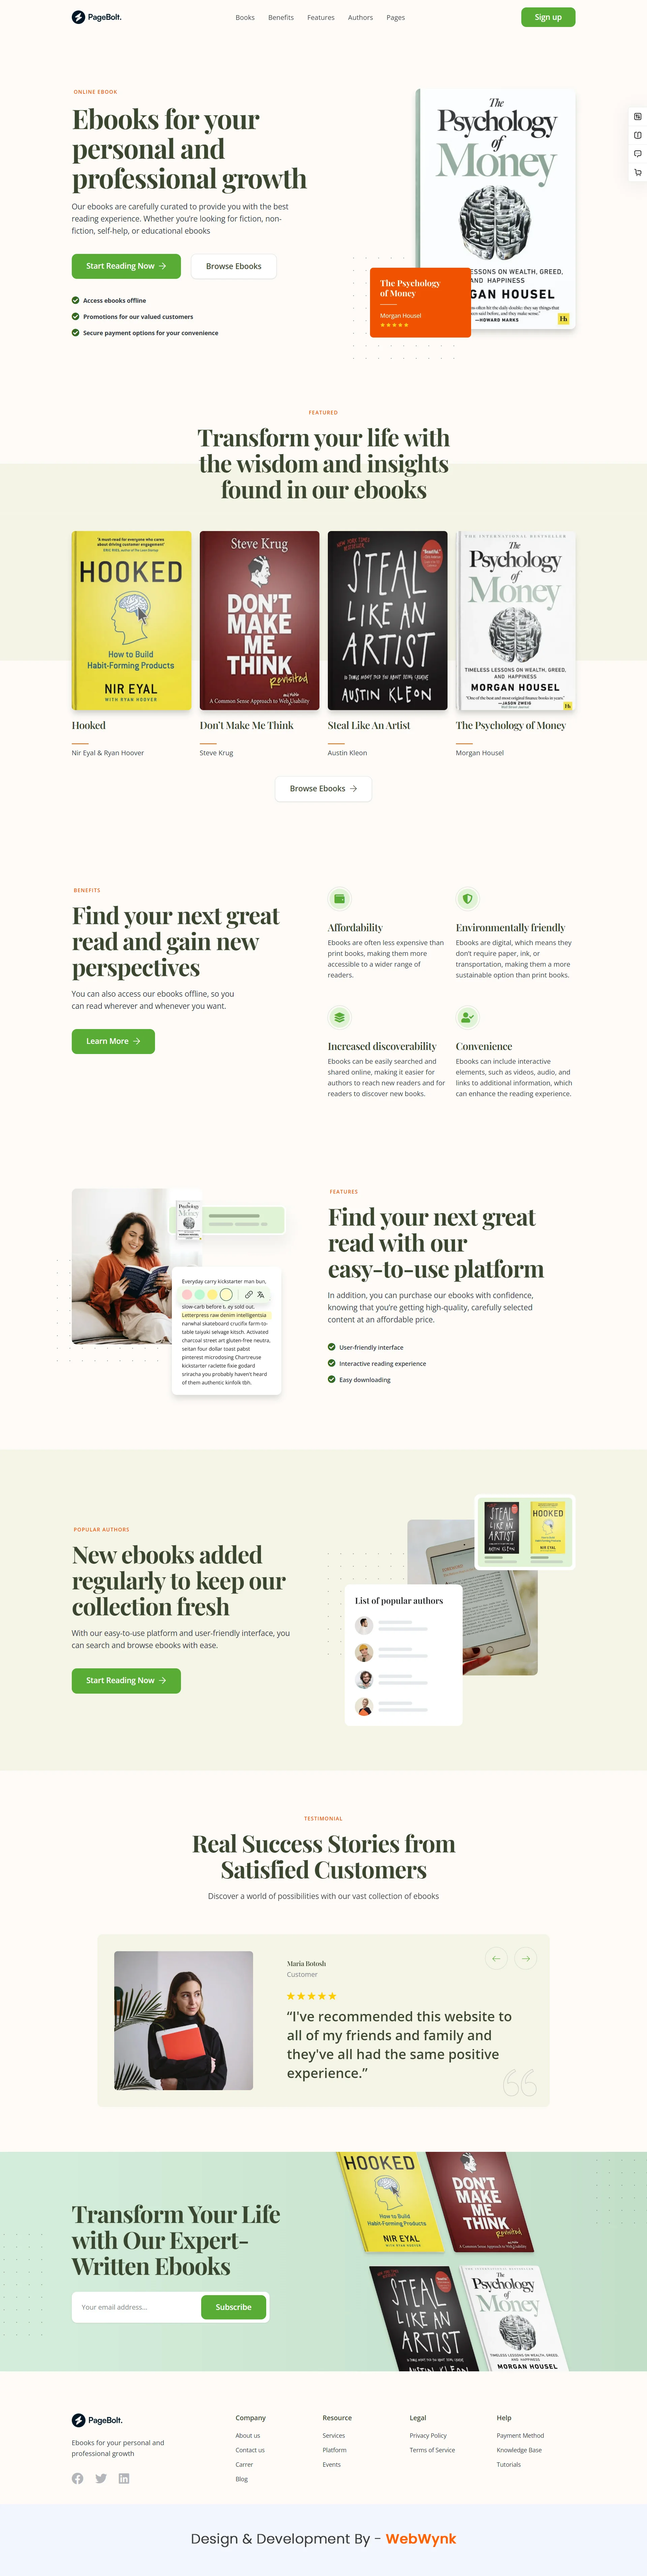 ebook-landing-page-design-webwynk